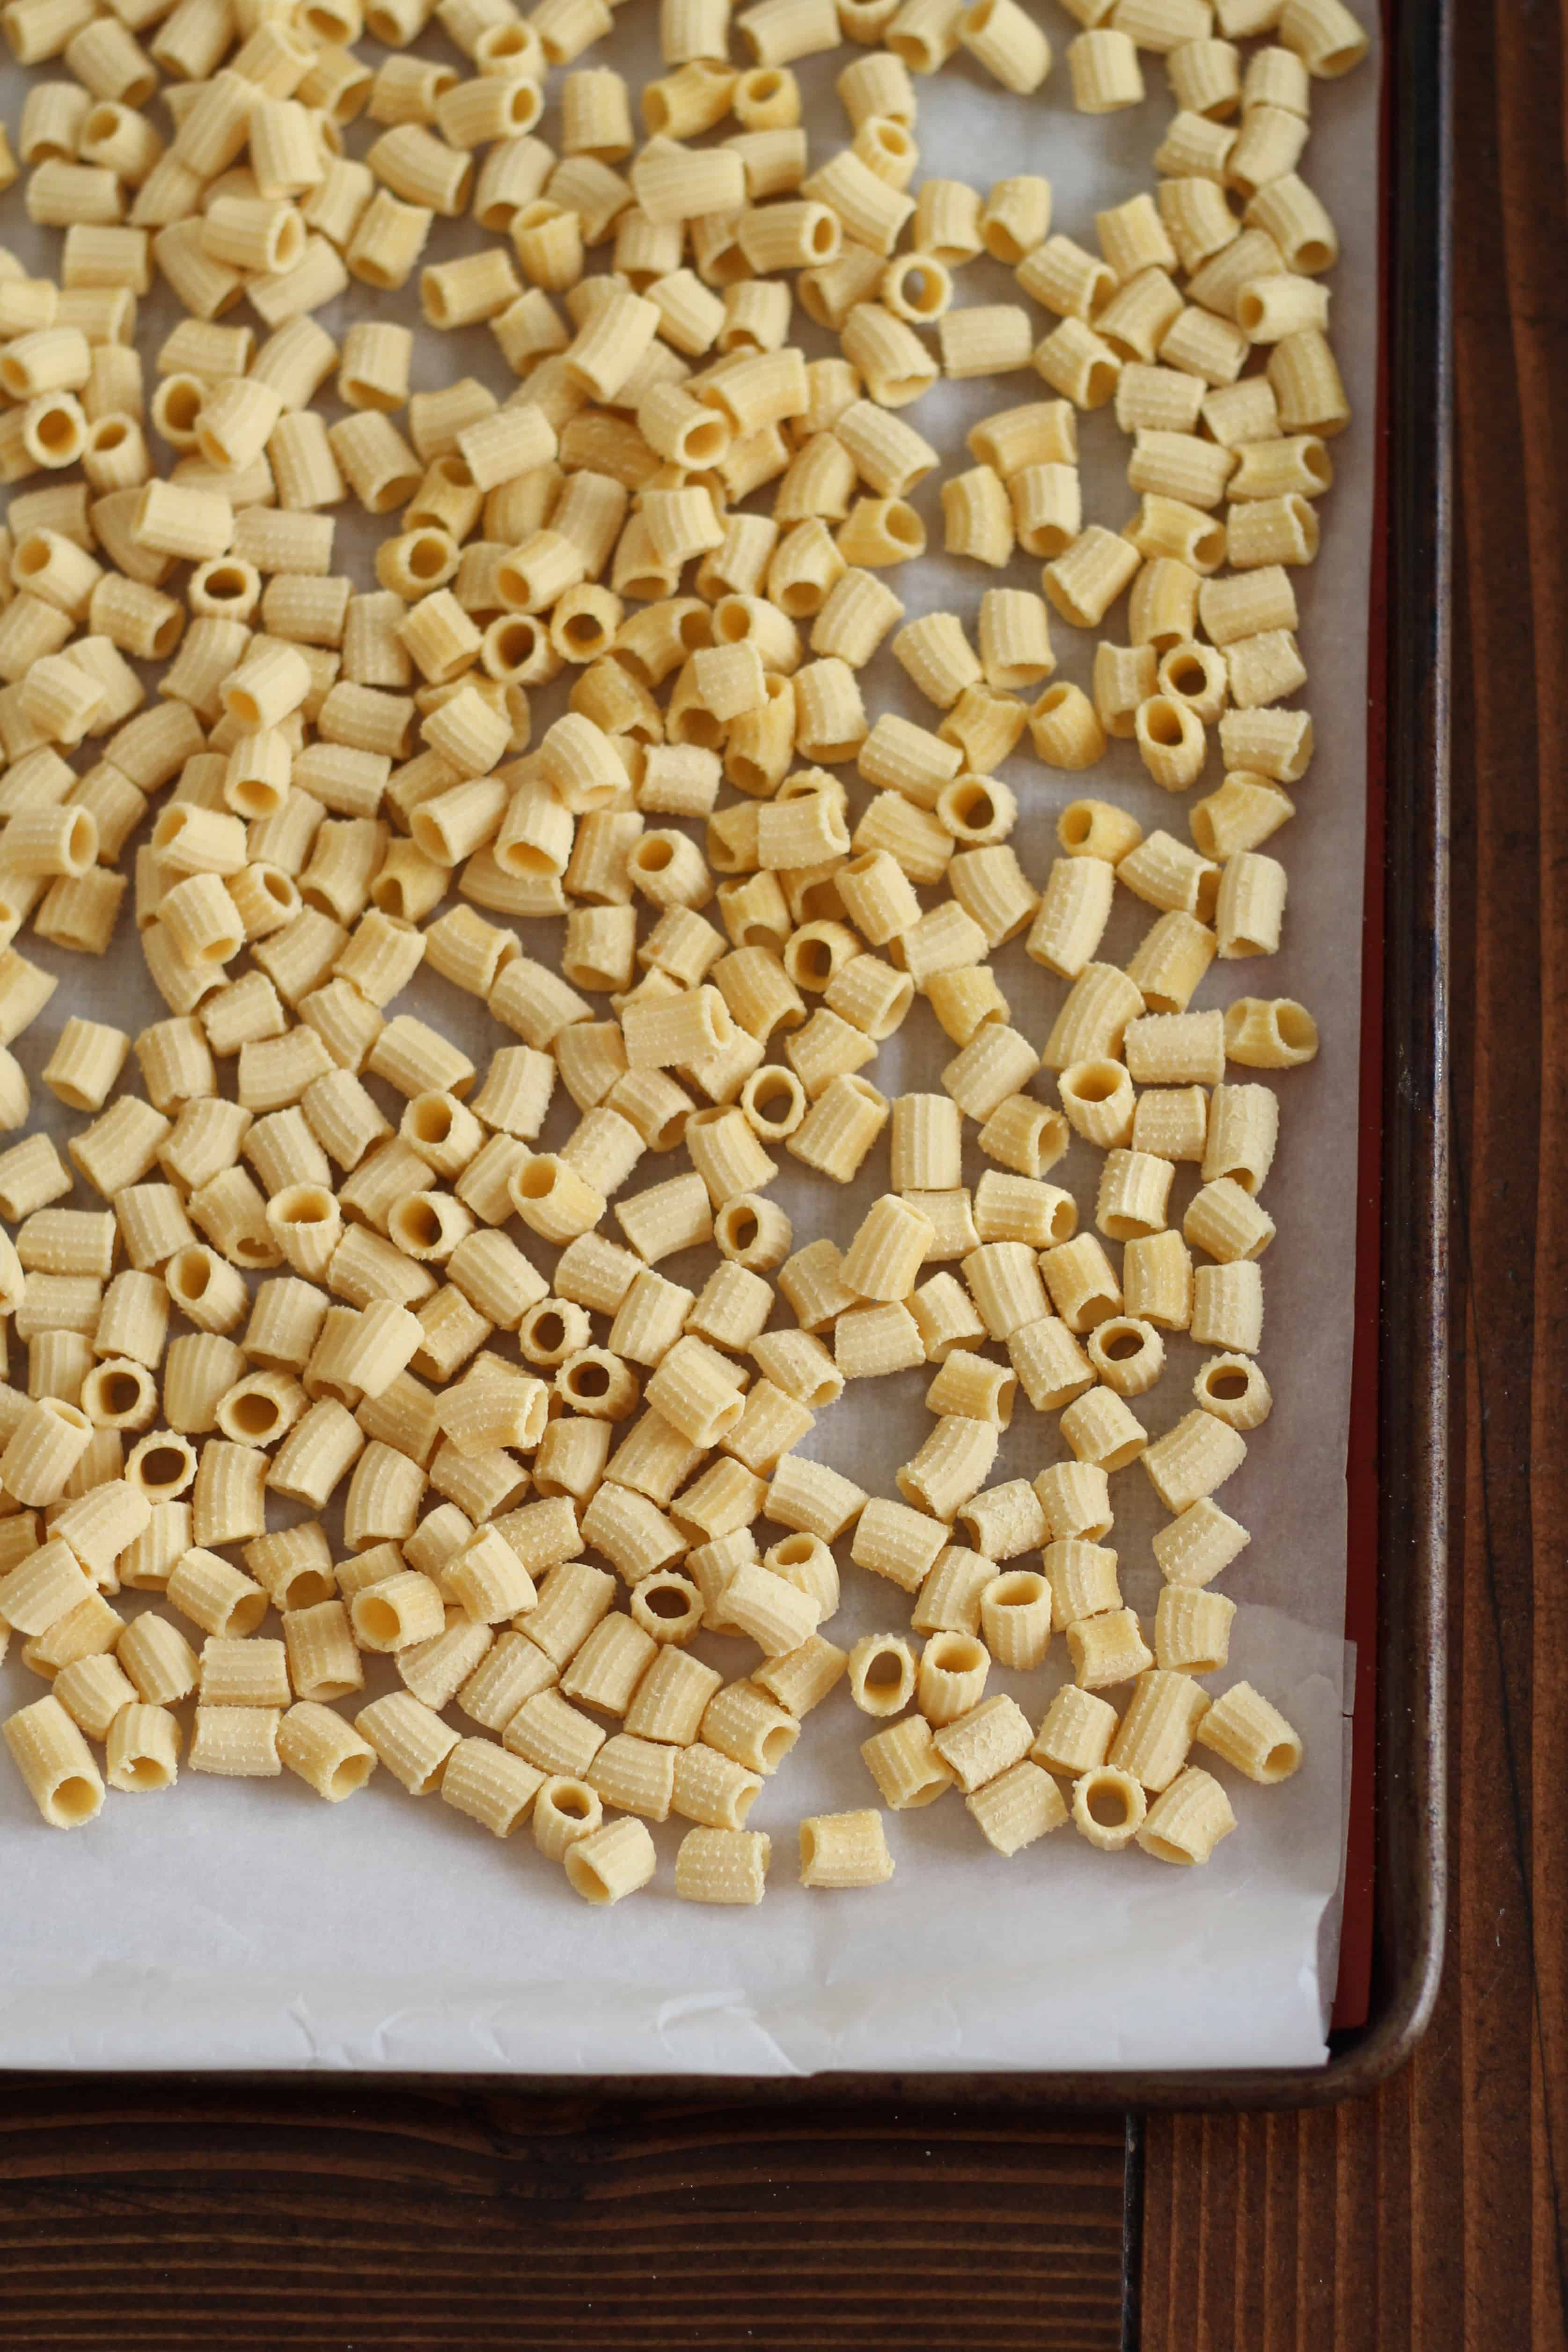 3 Piece For KitchenAid Pasta Roller Spaghetti Cutter Pressed Noodle  Attachment